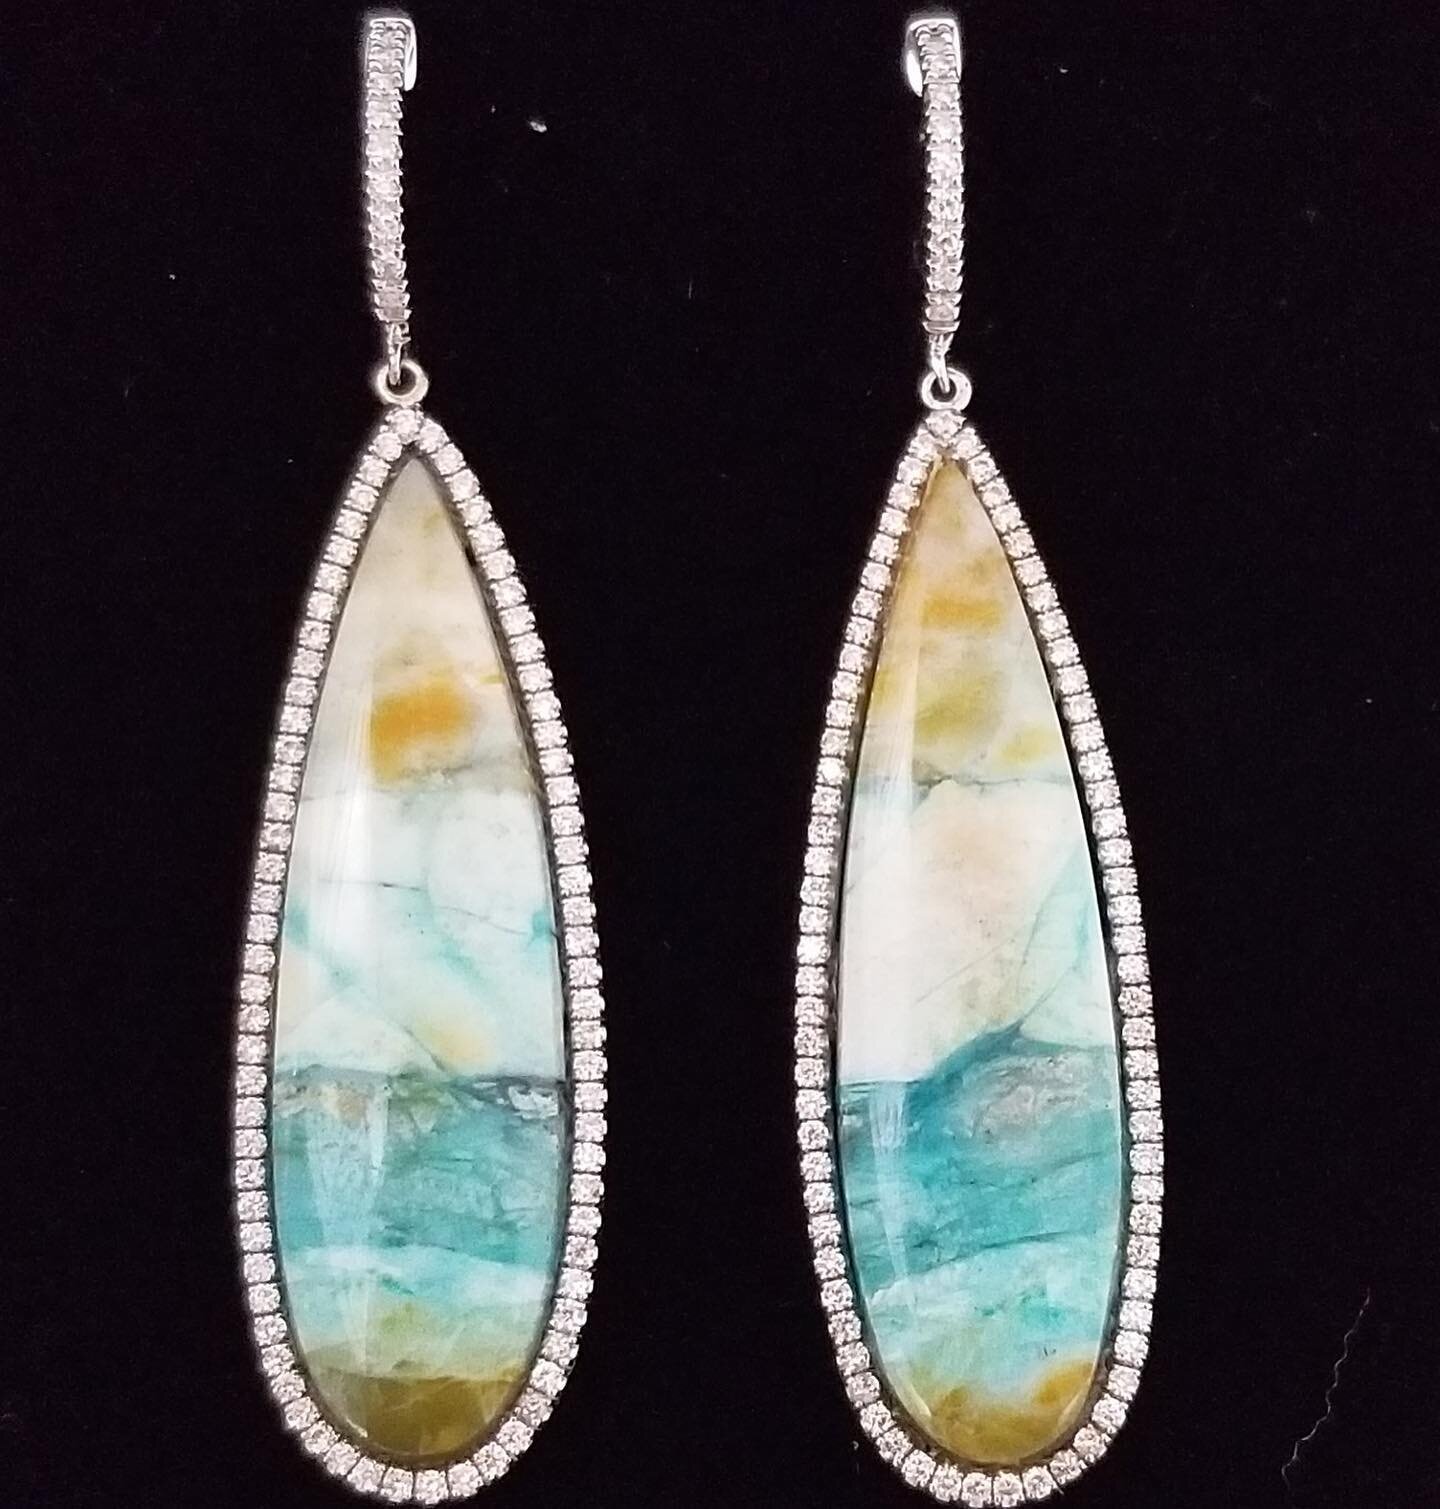 Sea breeze summer dream. This is a custom pair of 14k opal wood and diamond earrings. 🌊🌴
-
-
-
#opalwood #summerearrings #14kanddiamonds #diamondearrings #opalwoodearrings